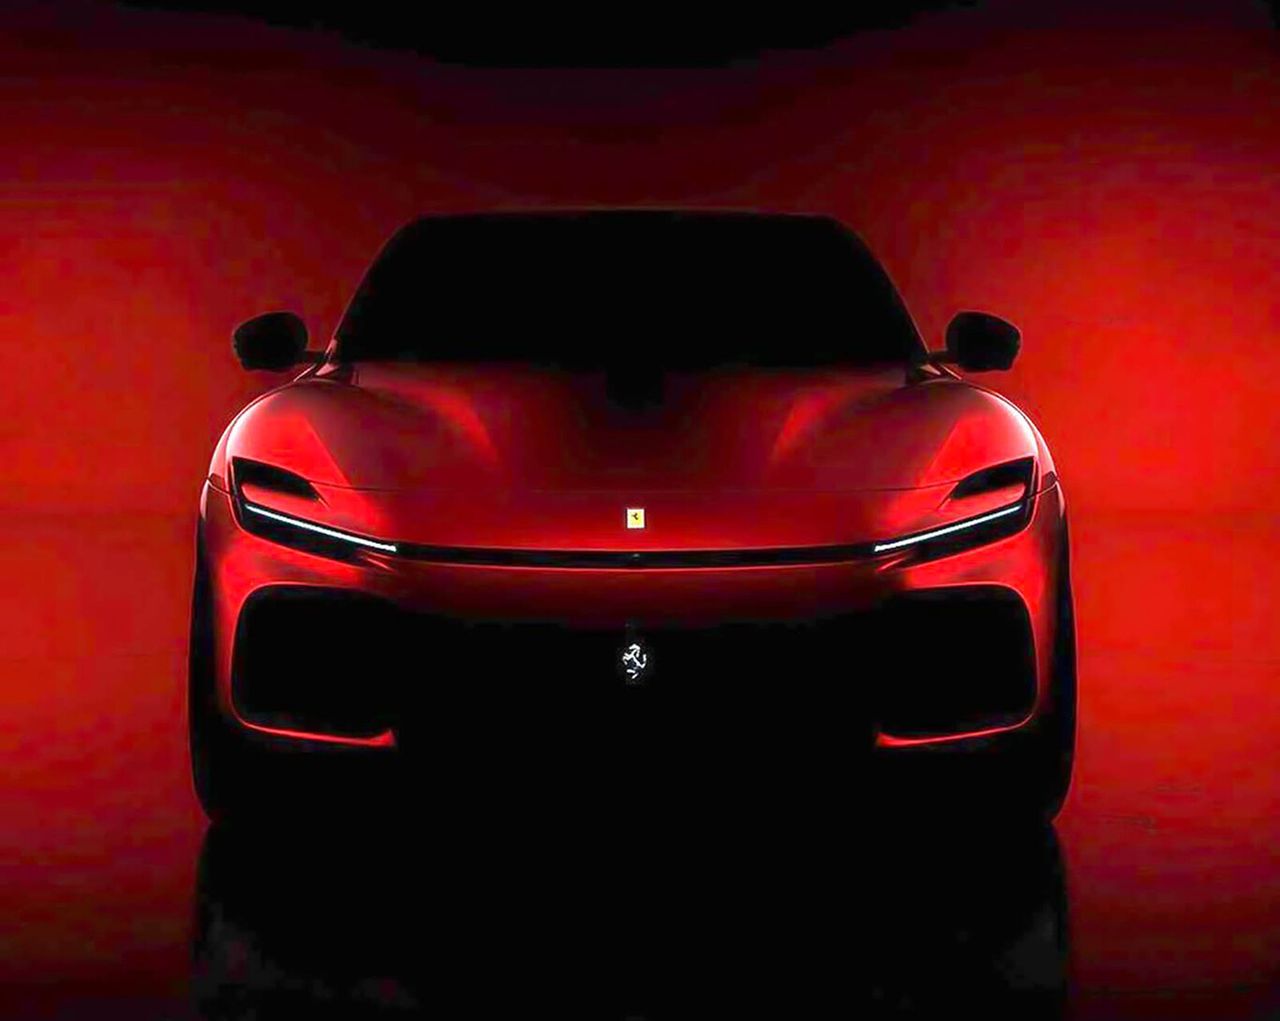 Ferrari zdradza datę debiutu SUV-a Purosangue i potwierdza - będzie V12